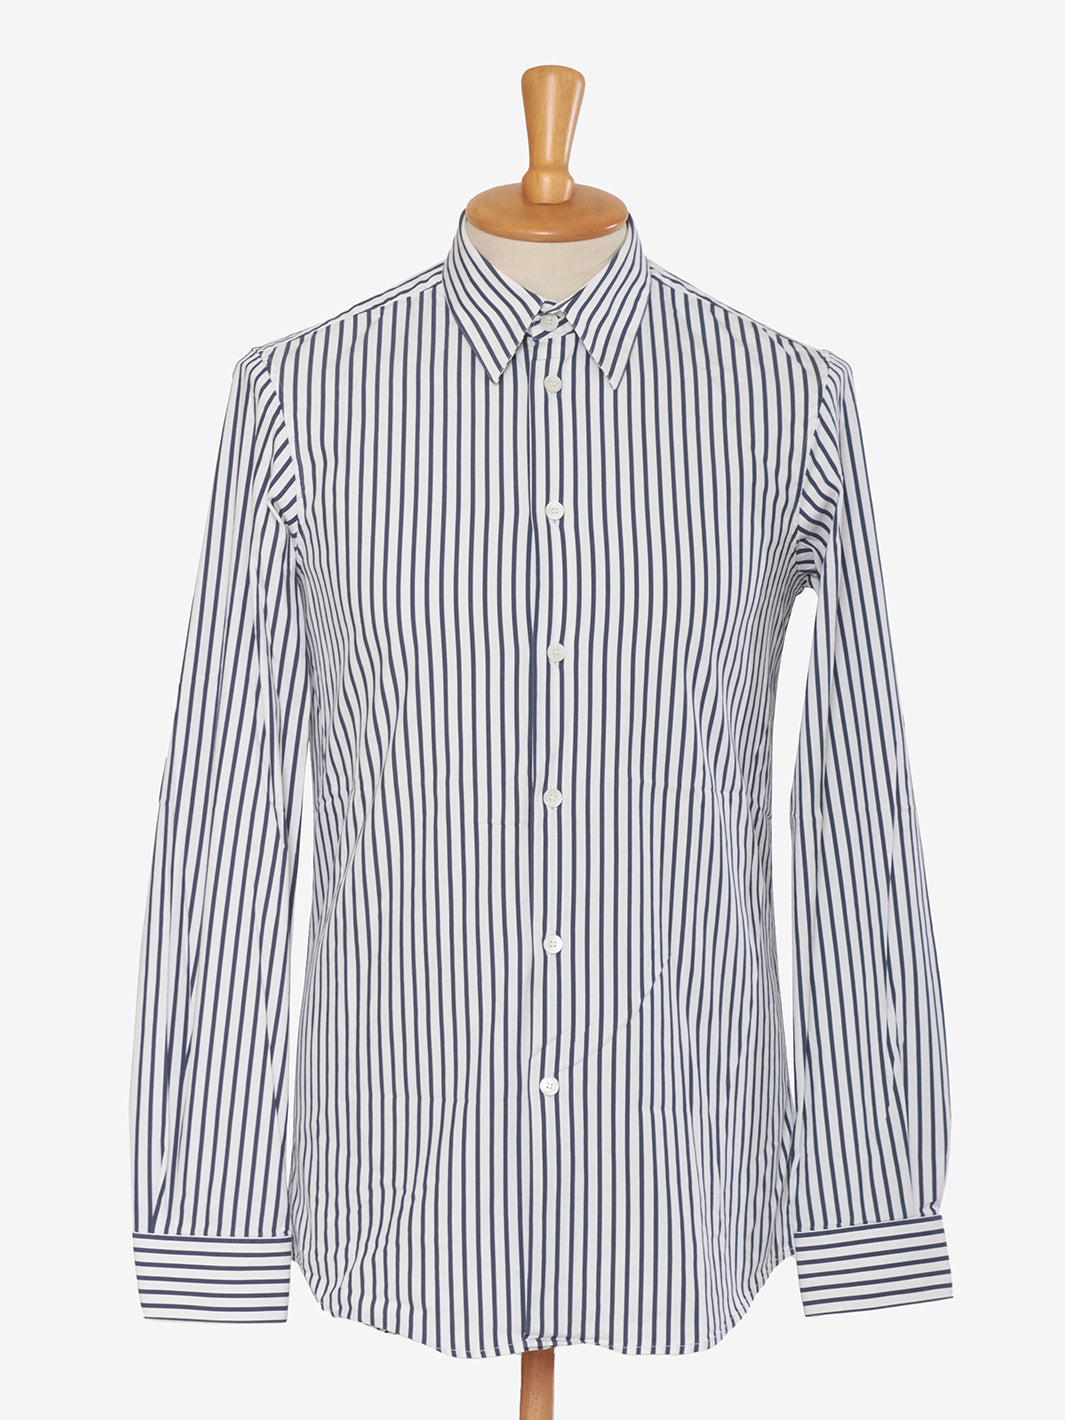 Helmut Lang Cotton Wrinkle Shirt